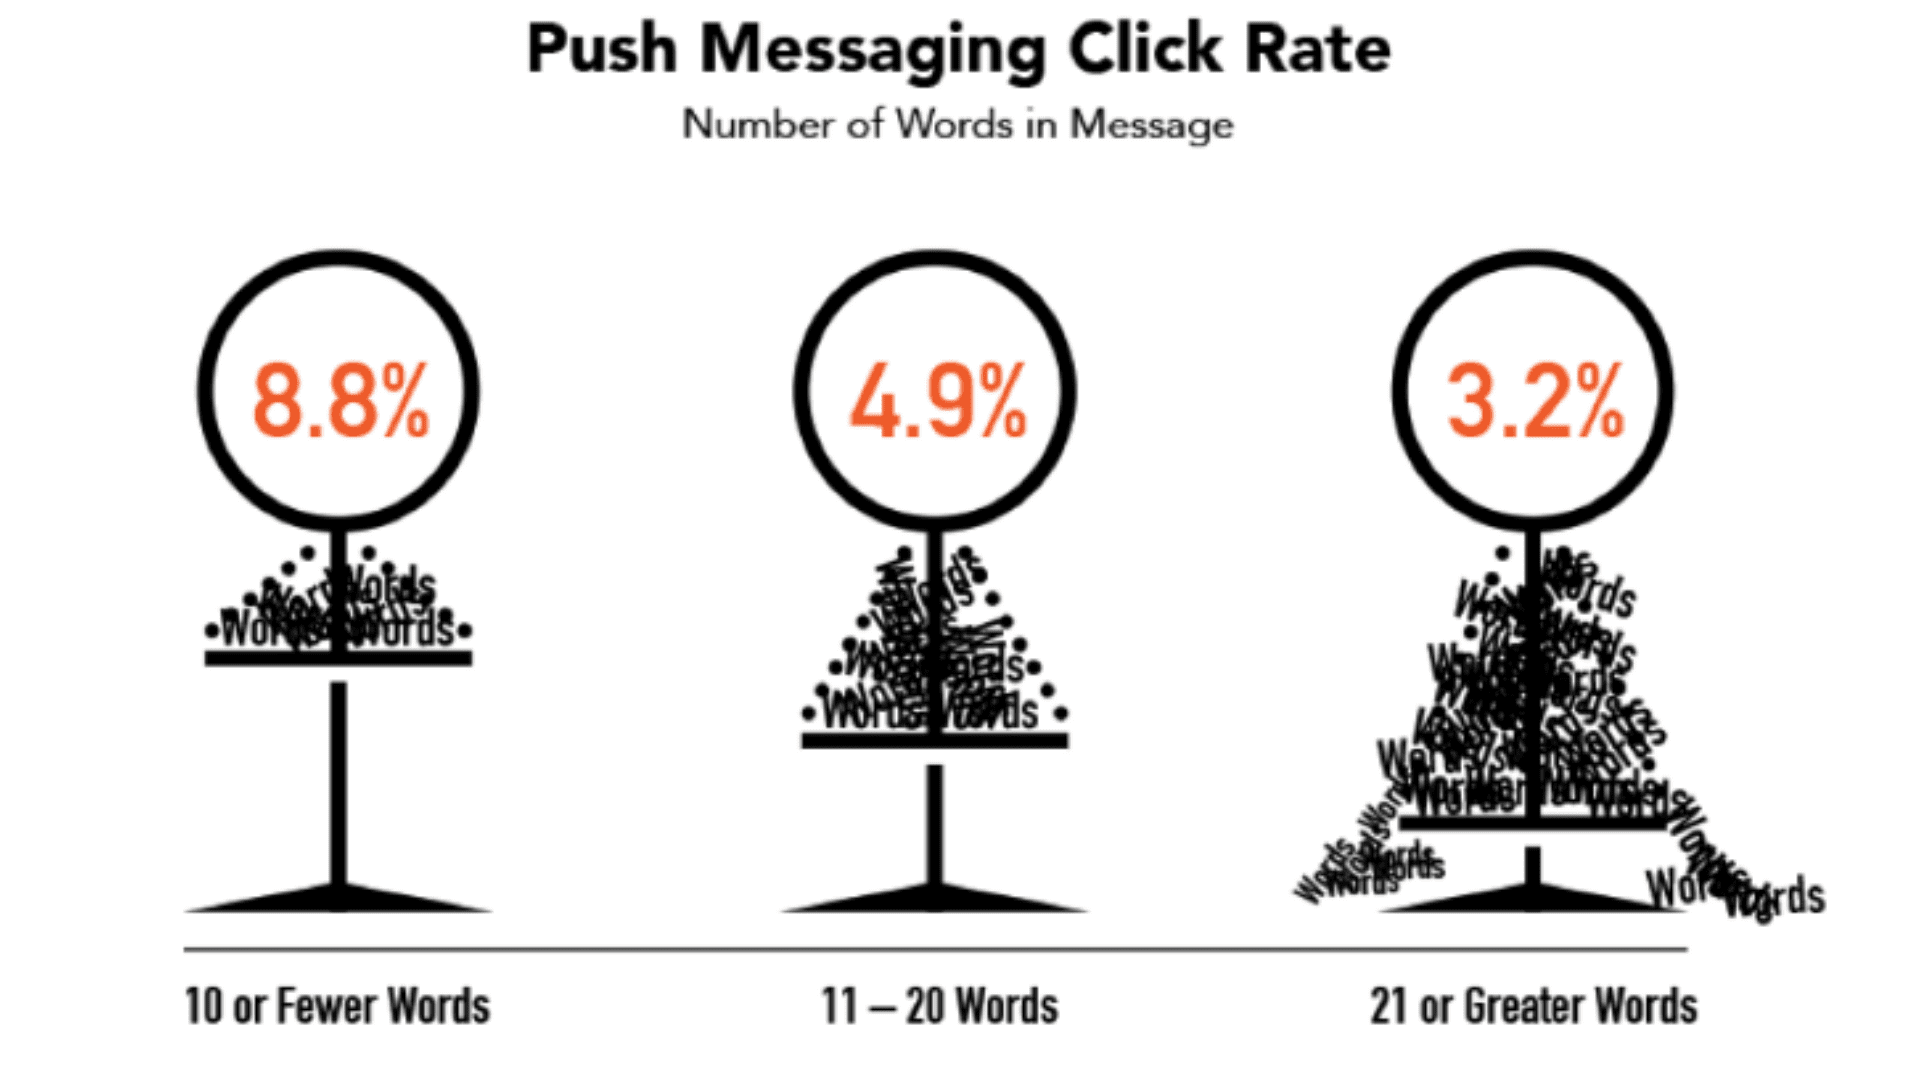 Push messaging click through rate